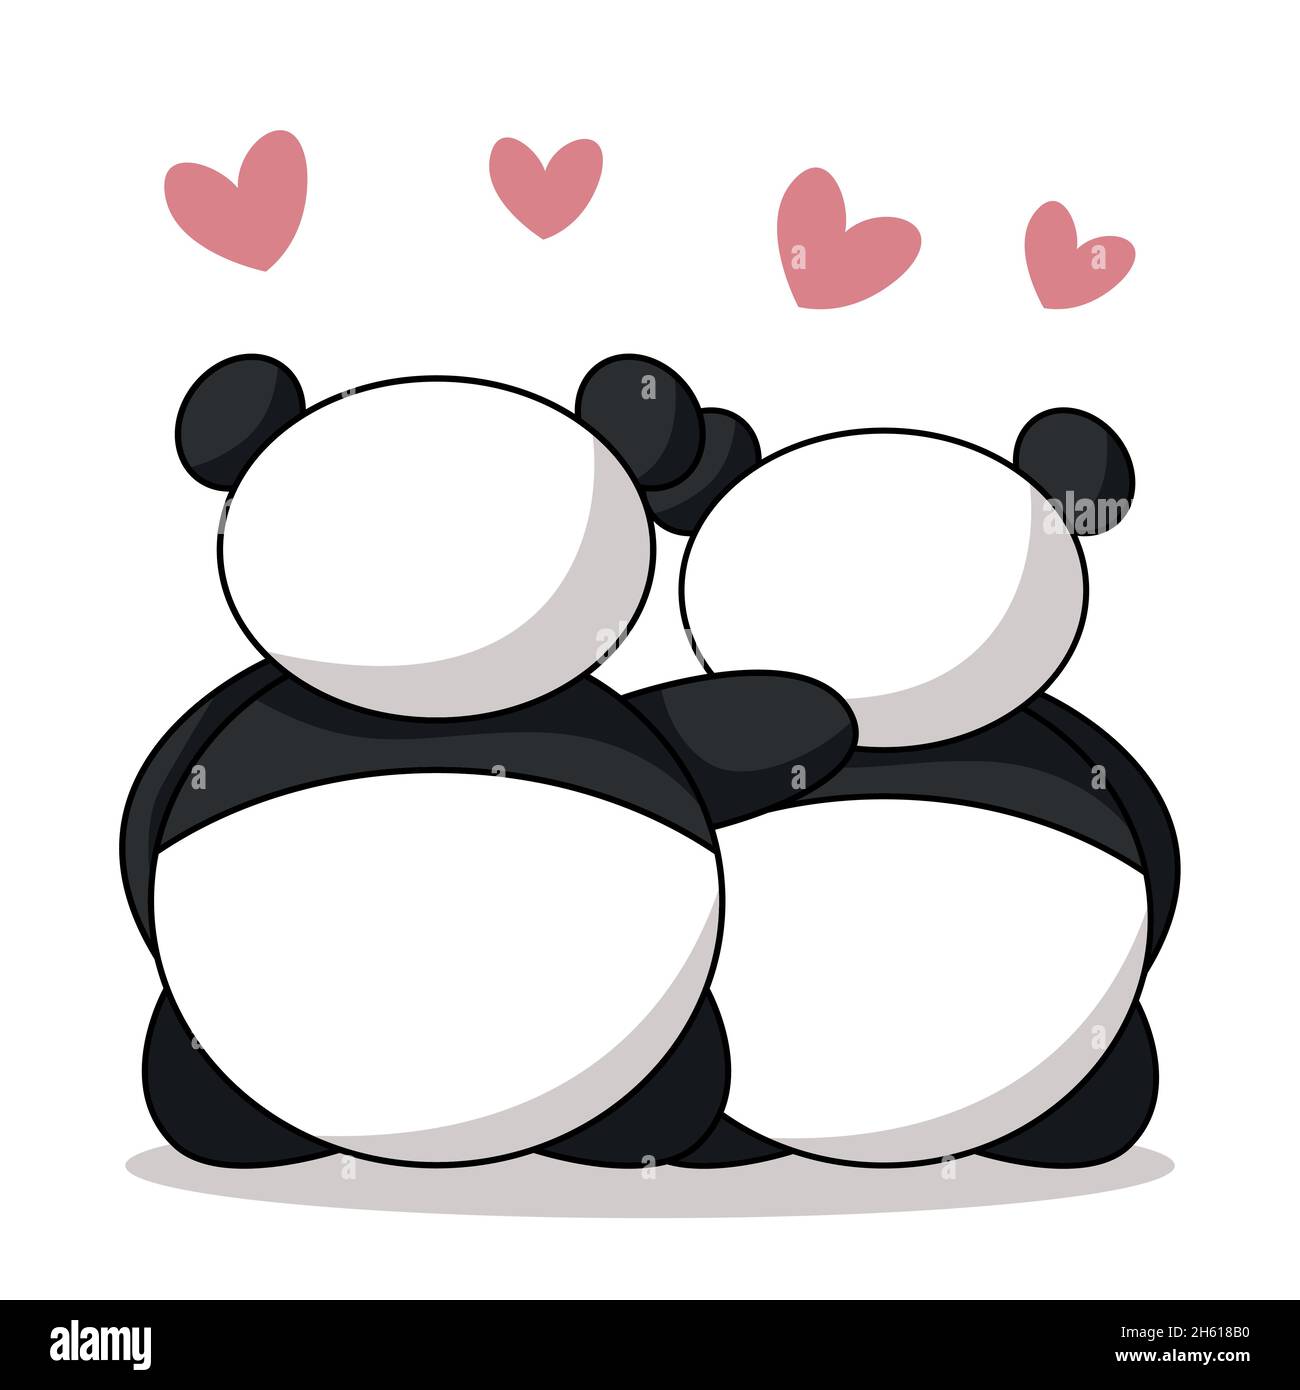 Osos panda dibujo Imágenes recortadas de stock - Alamy